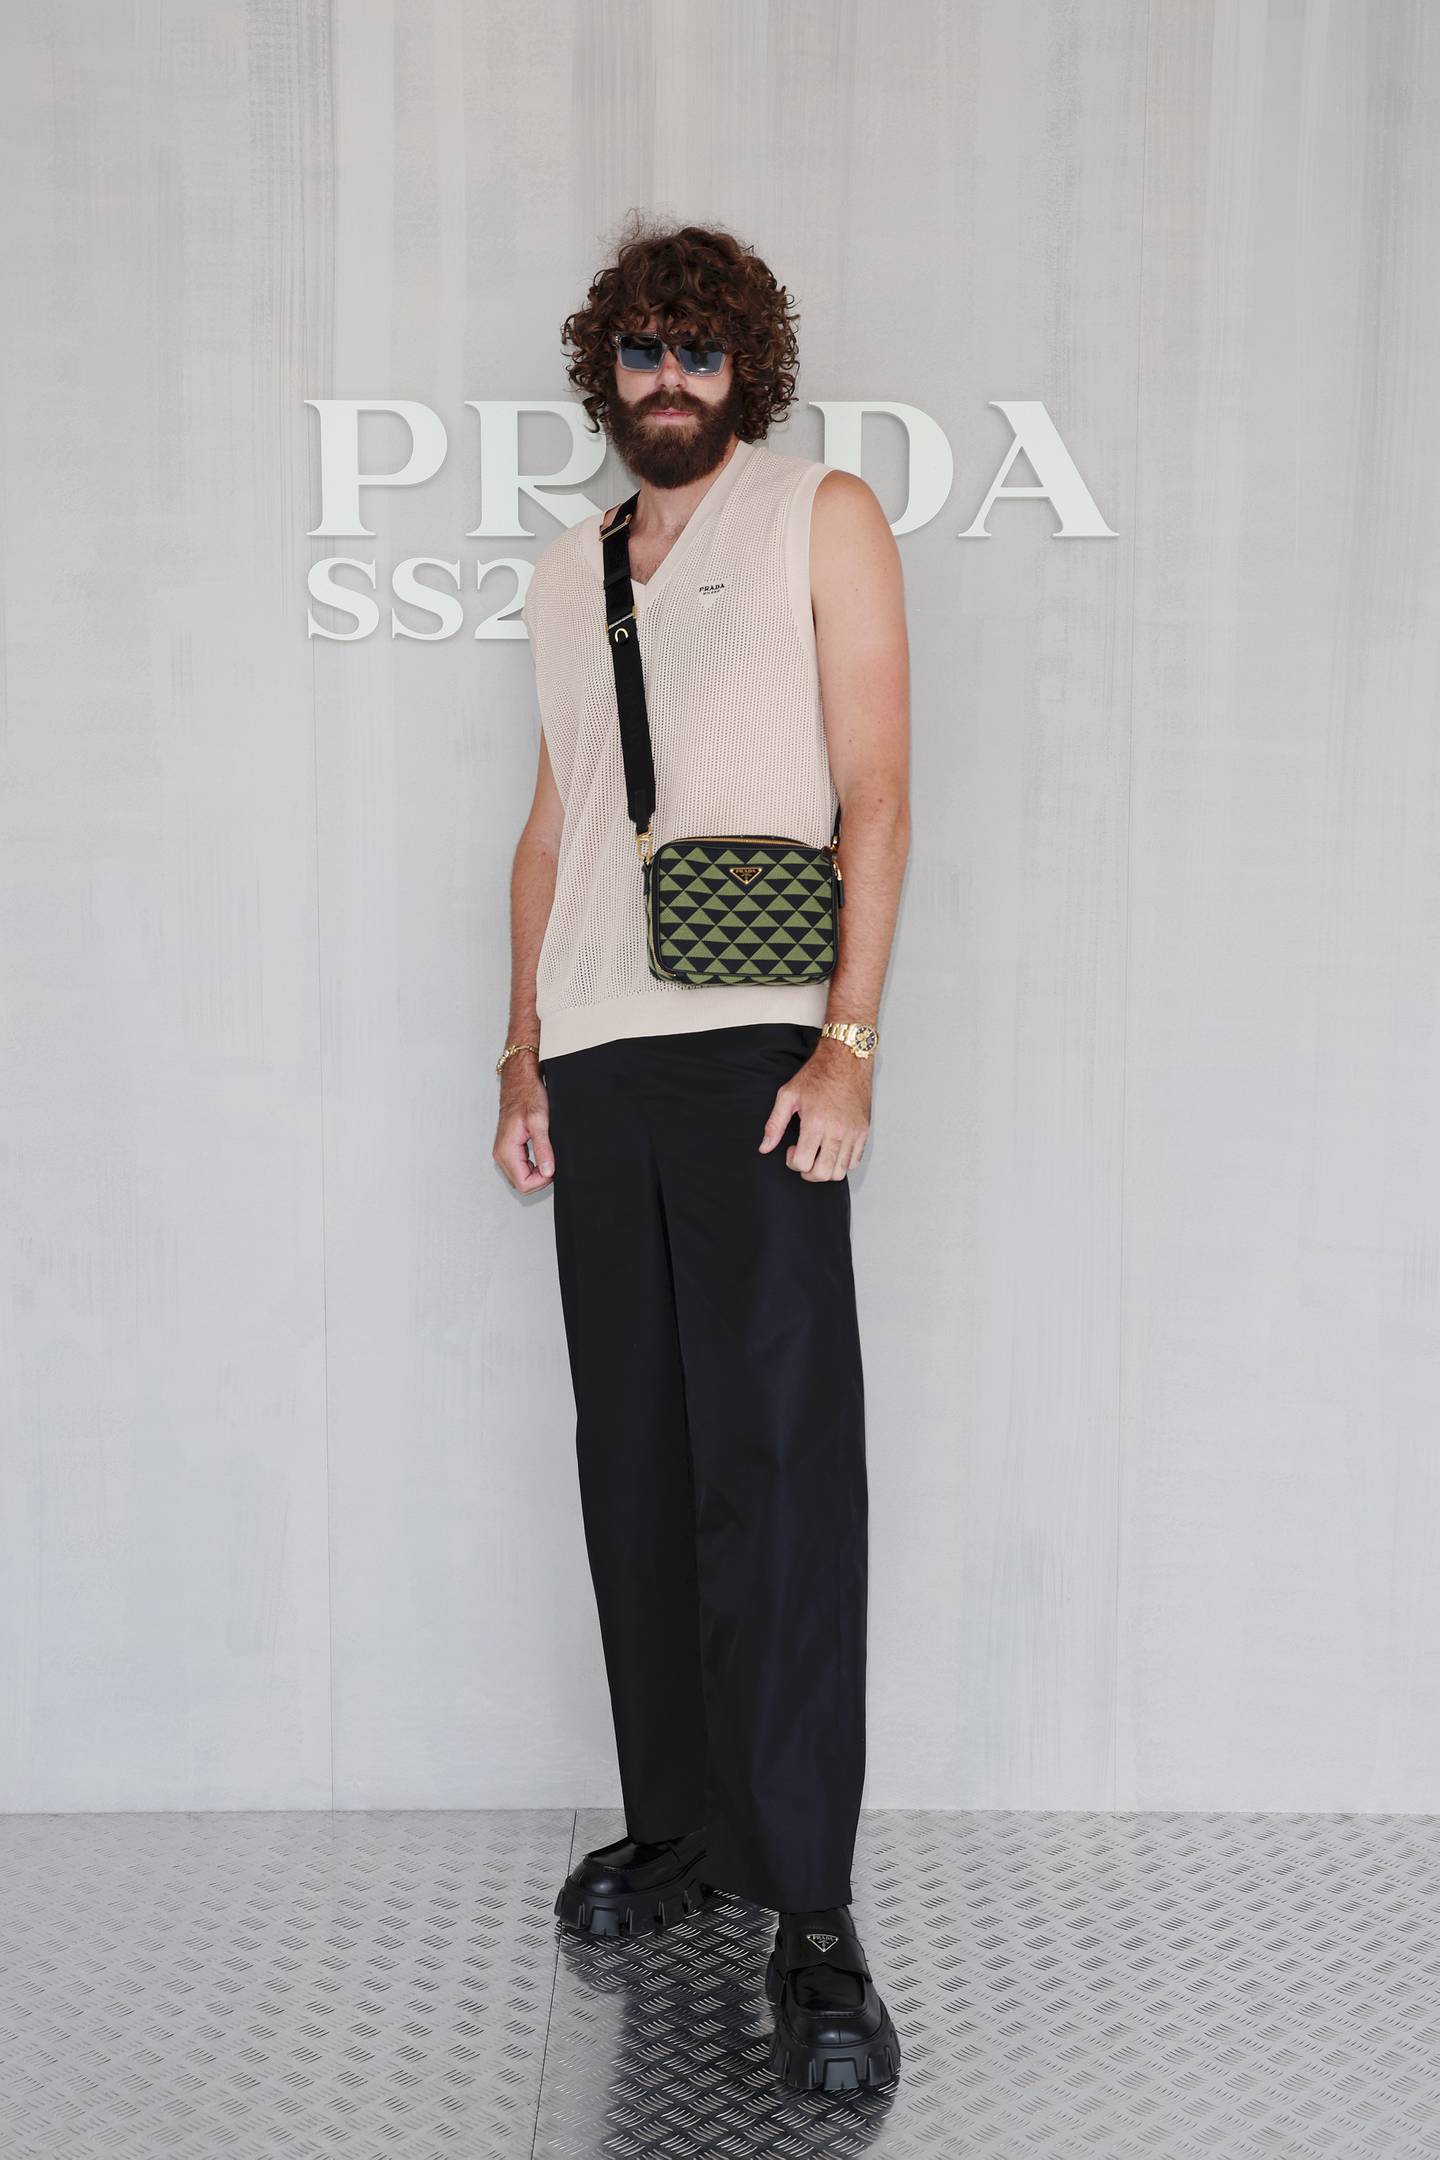 Reilly Opelka attends the Prada Spring/Summer 2024 menswear fashion show during the Milan Men's Fashion Week.